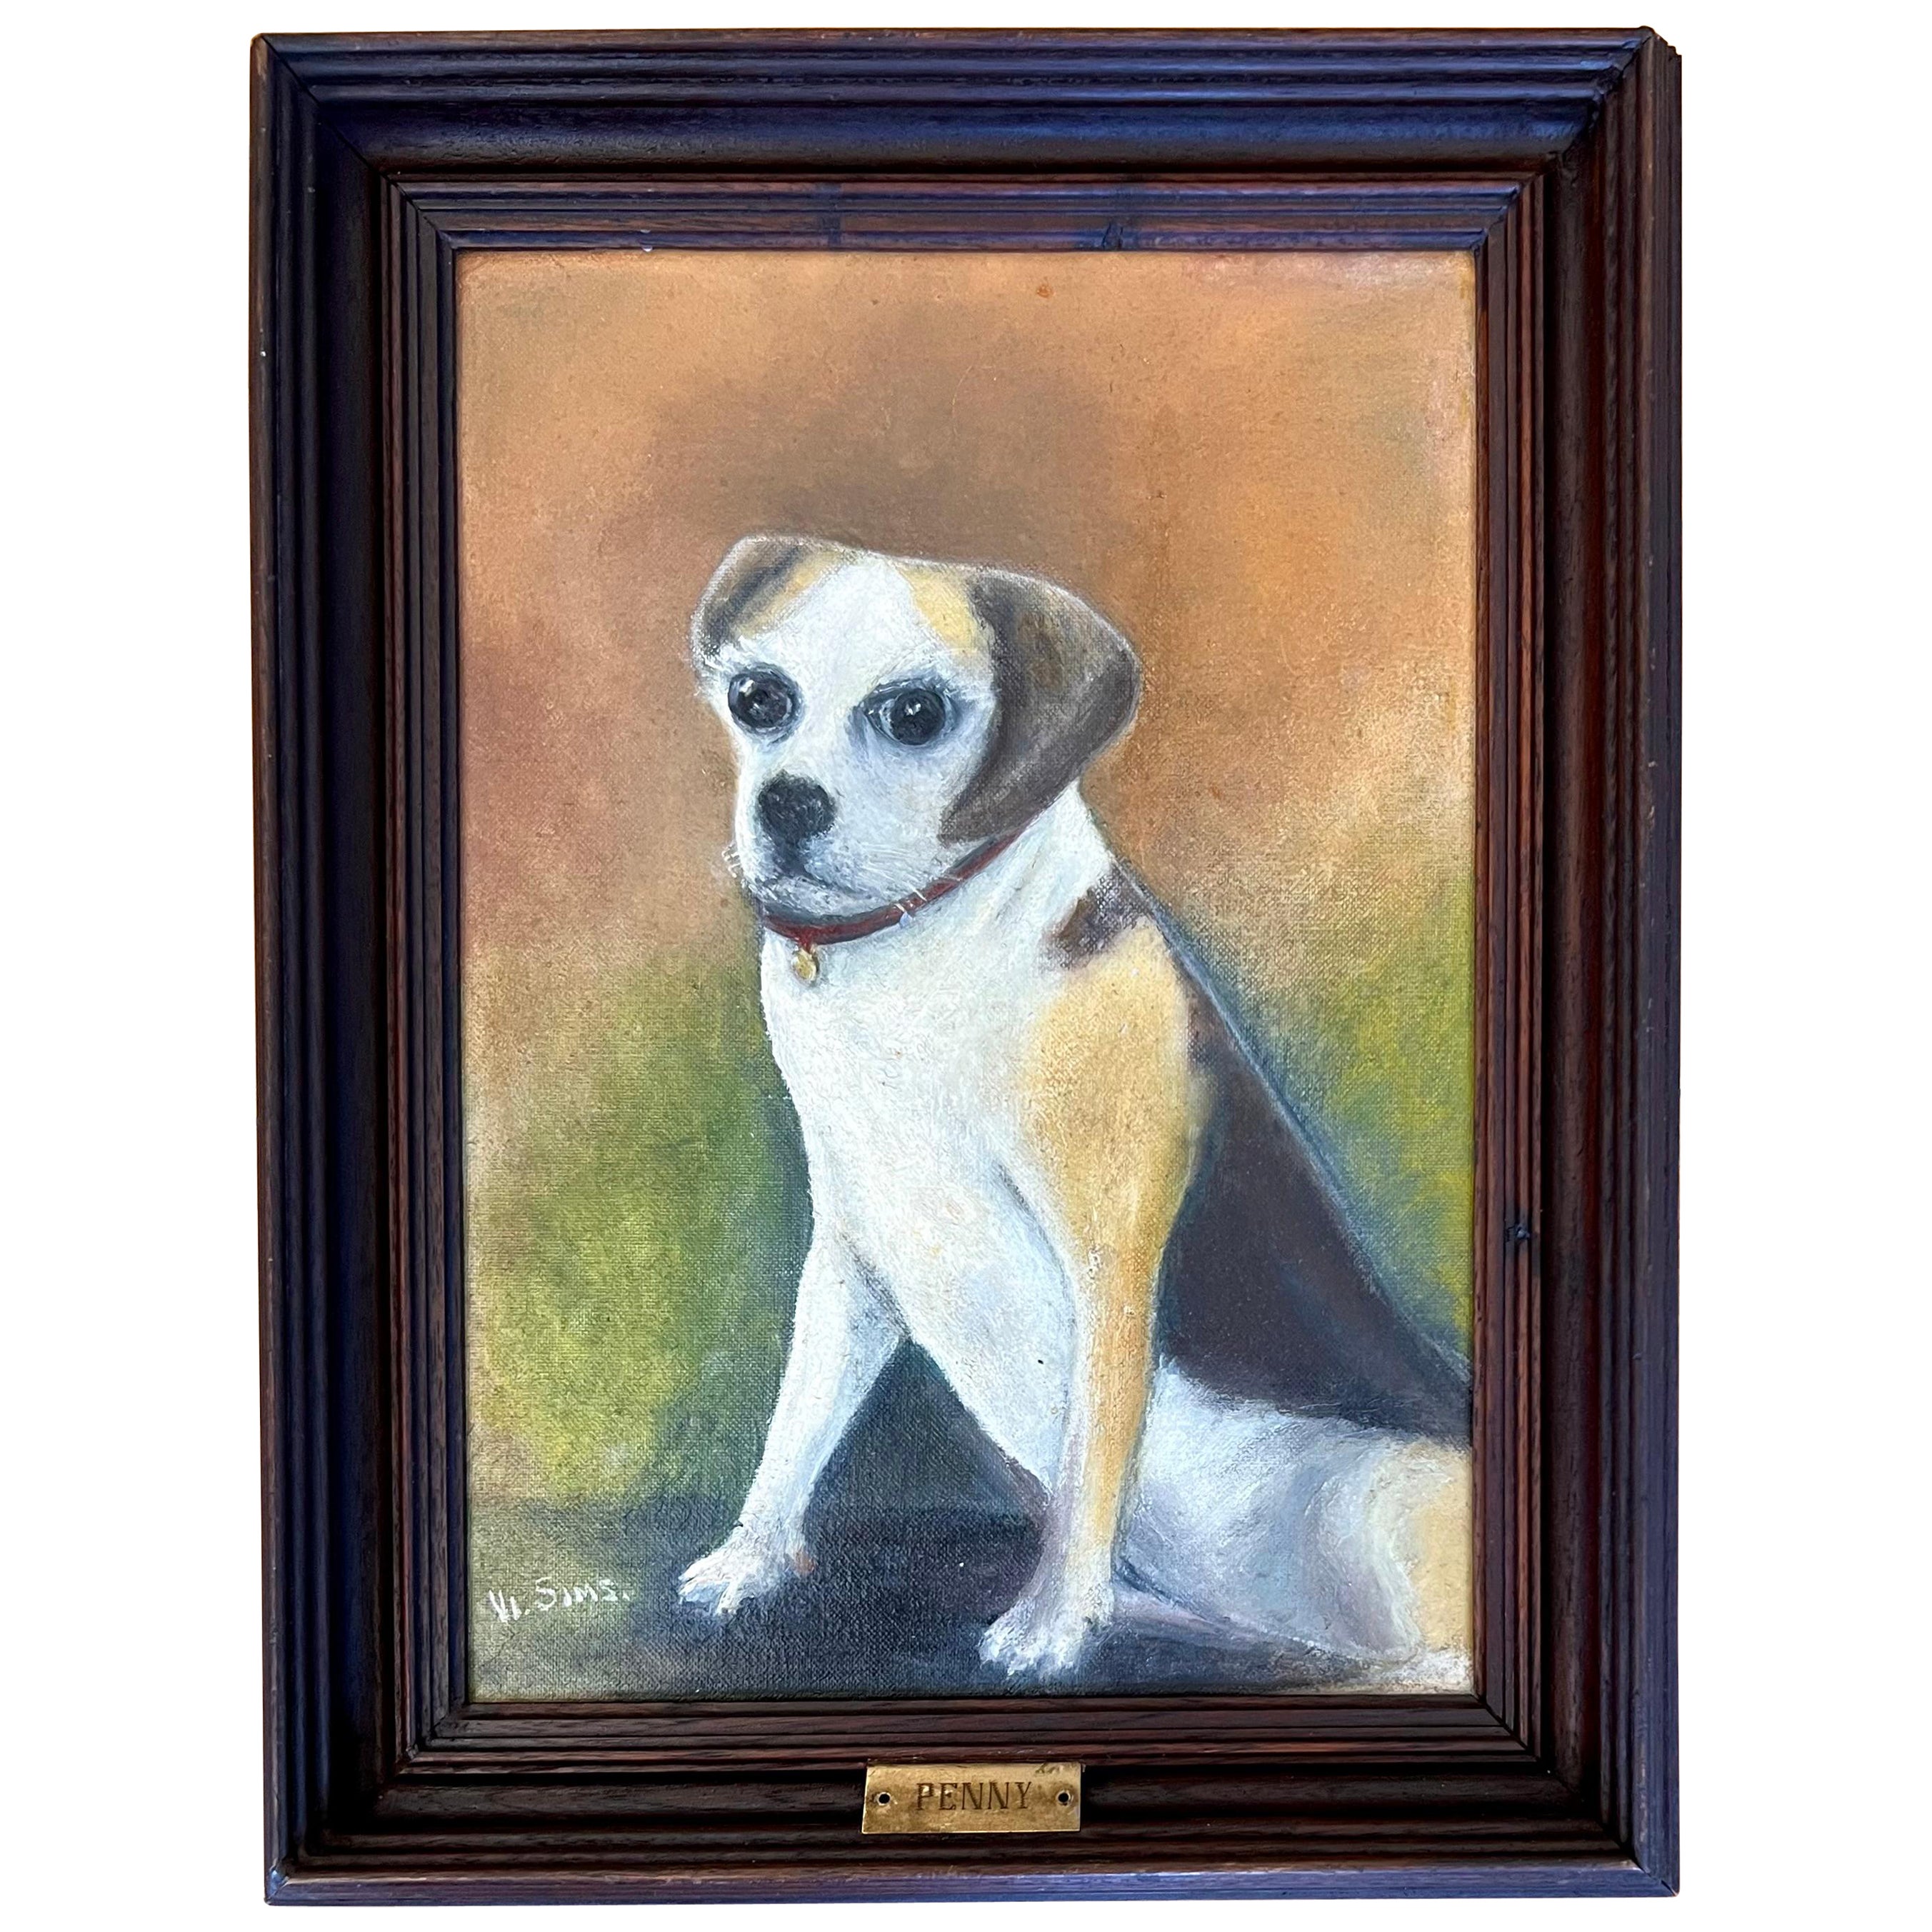 Folk Art Dog Painting of "Penny"